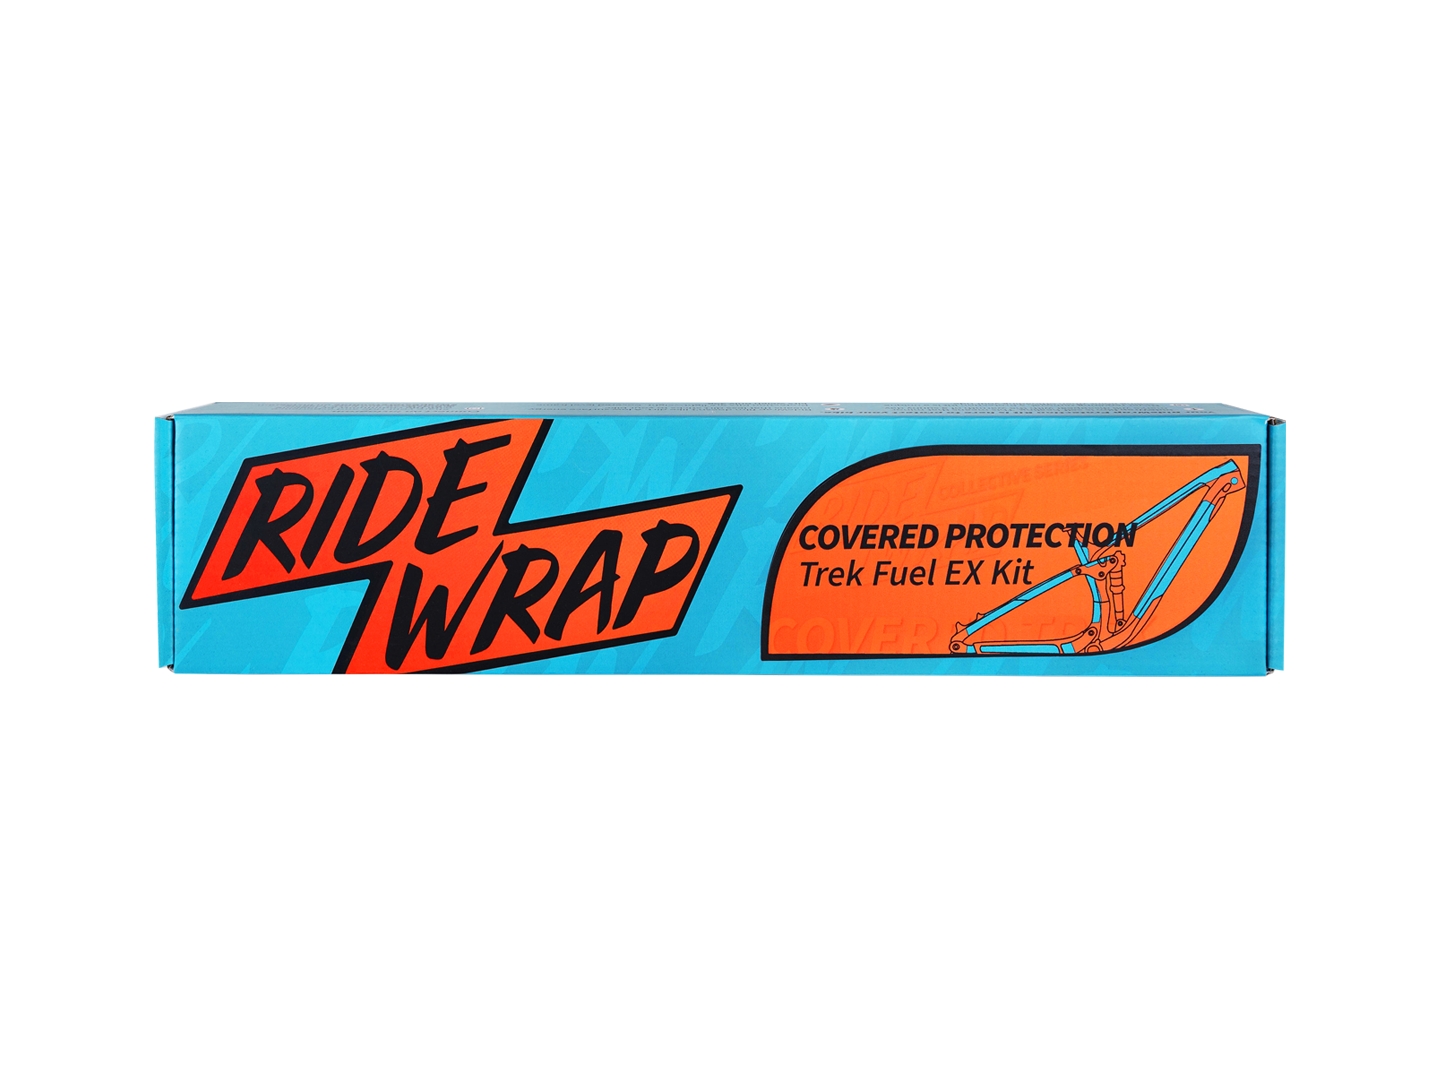 Kit vernis de protection clair mat RideWrap Trek Fuel EX Covered